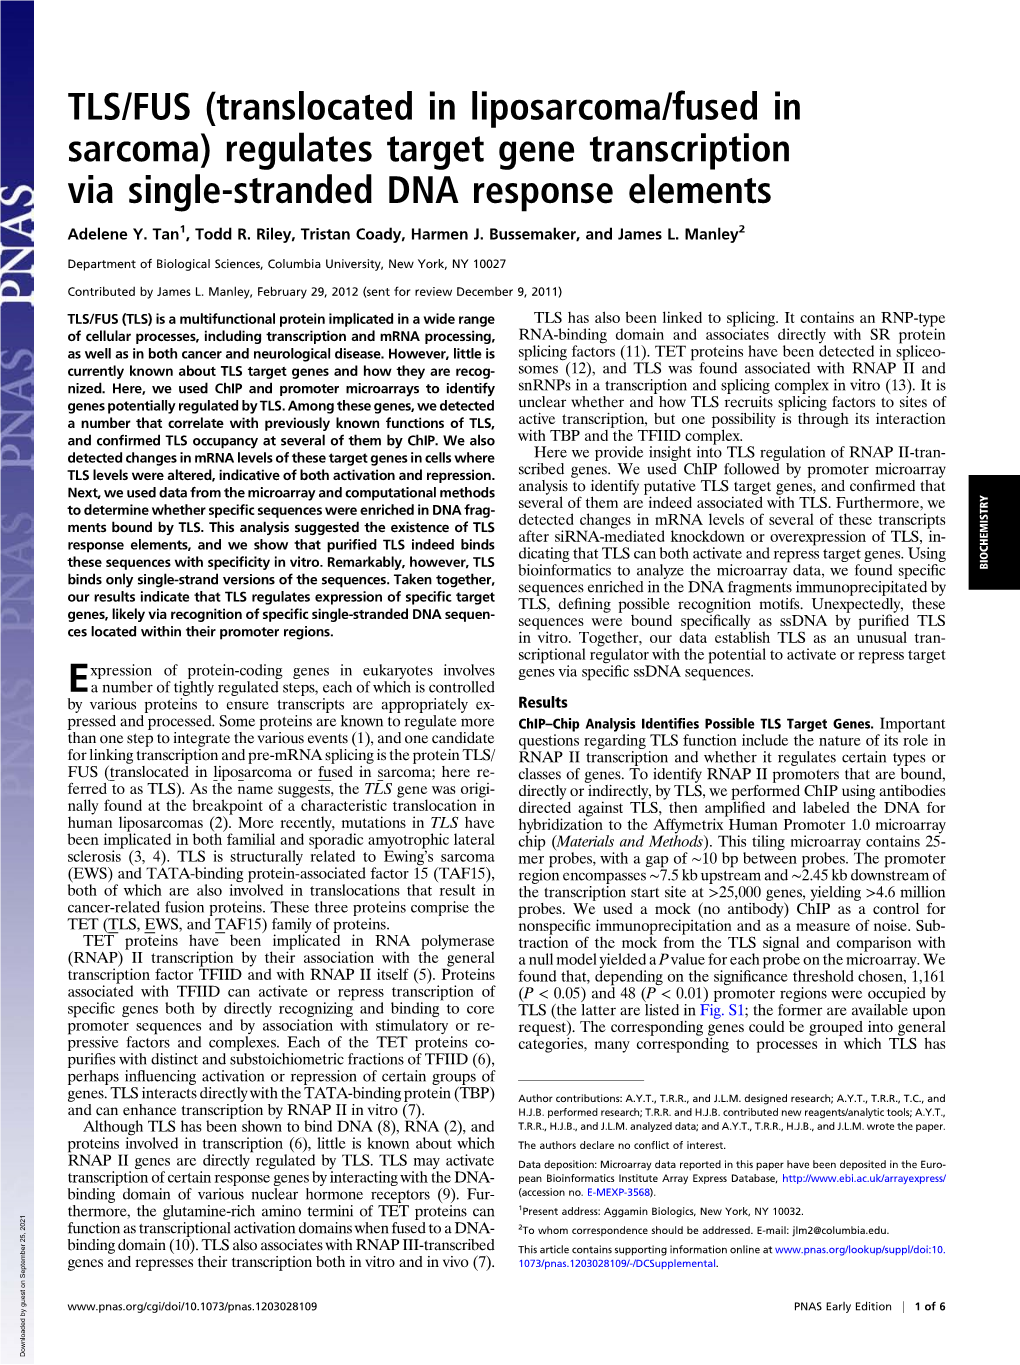 Regulates Target Gene Transcription Via Single-Stranded DNA Response Elements